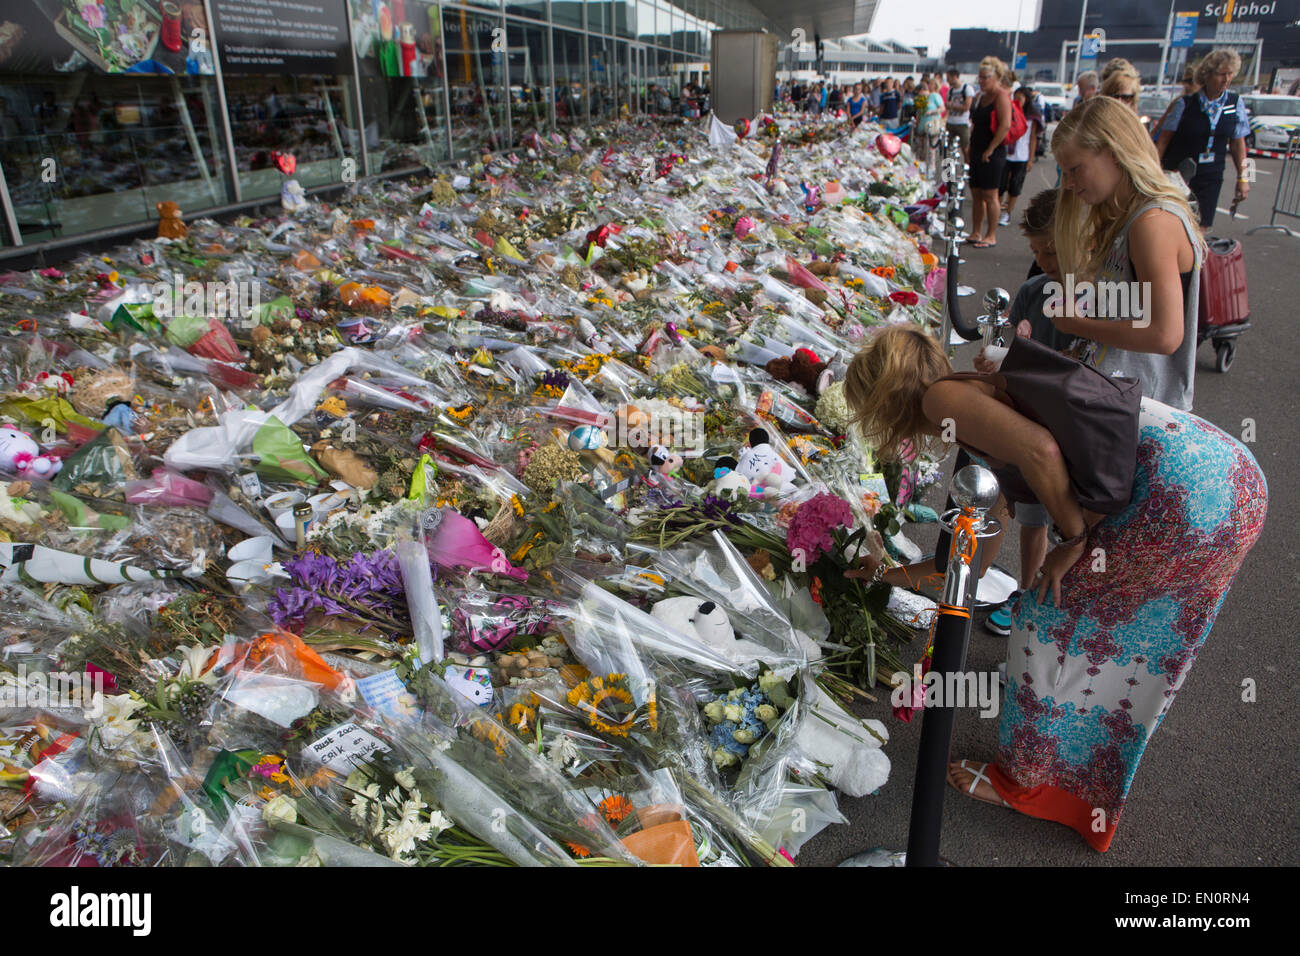 memorial of MH 17 crash at schiphol airport (17 juli 2014) Stock Photo